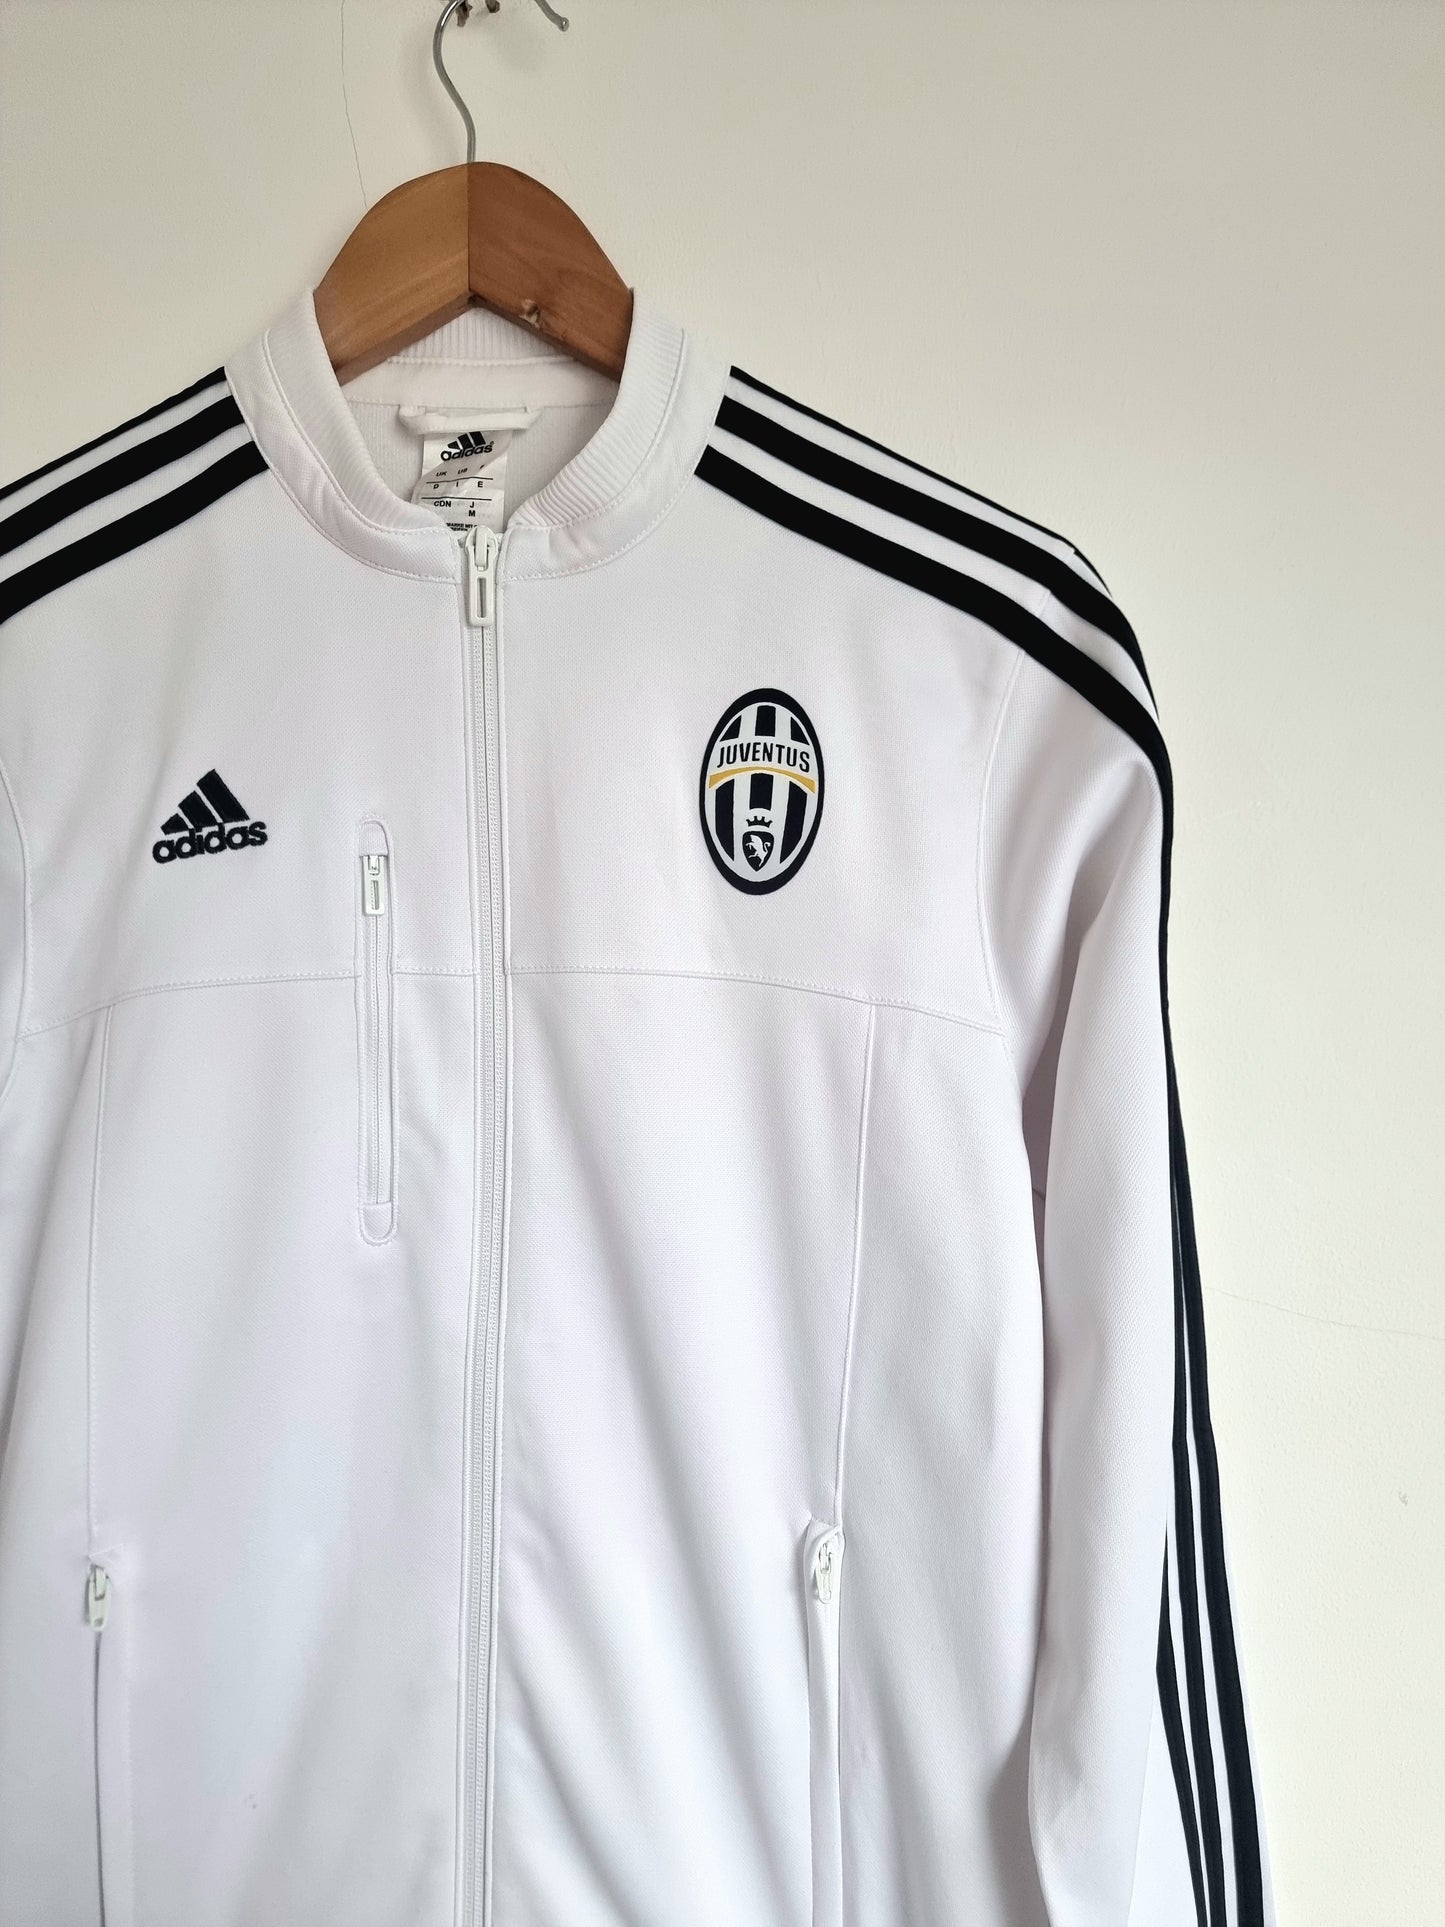 Adidas Juventus 15/16 Track Jacket Small